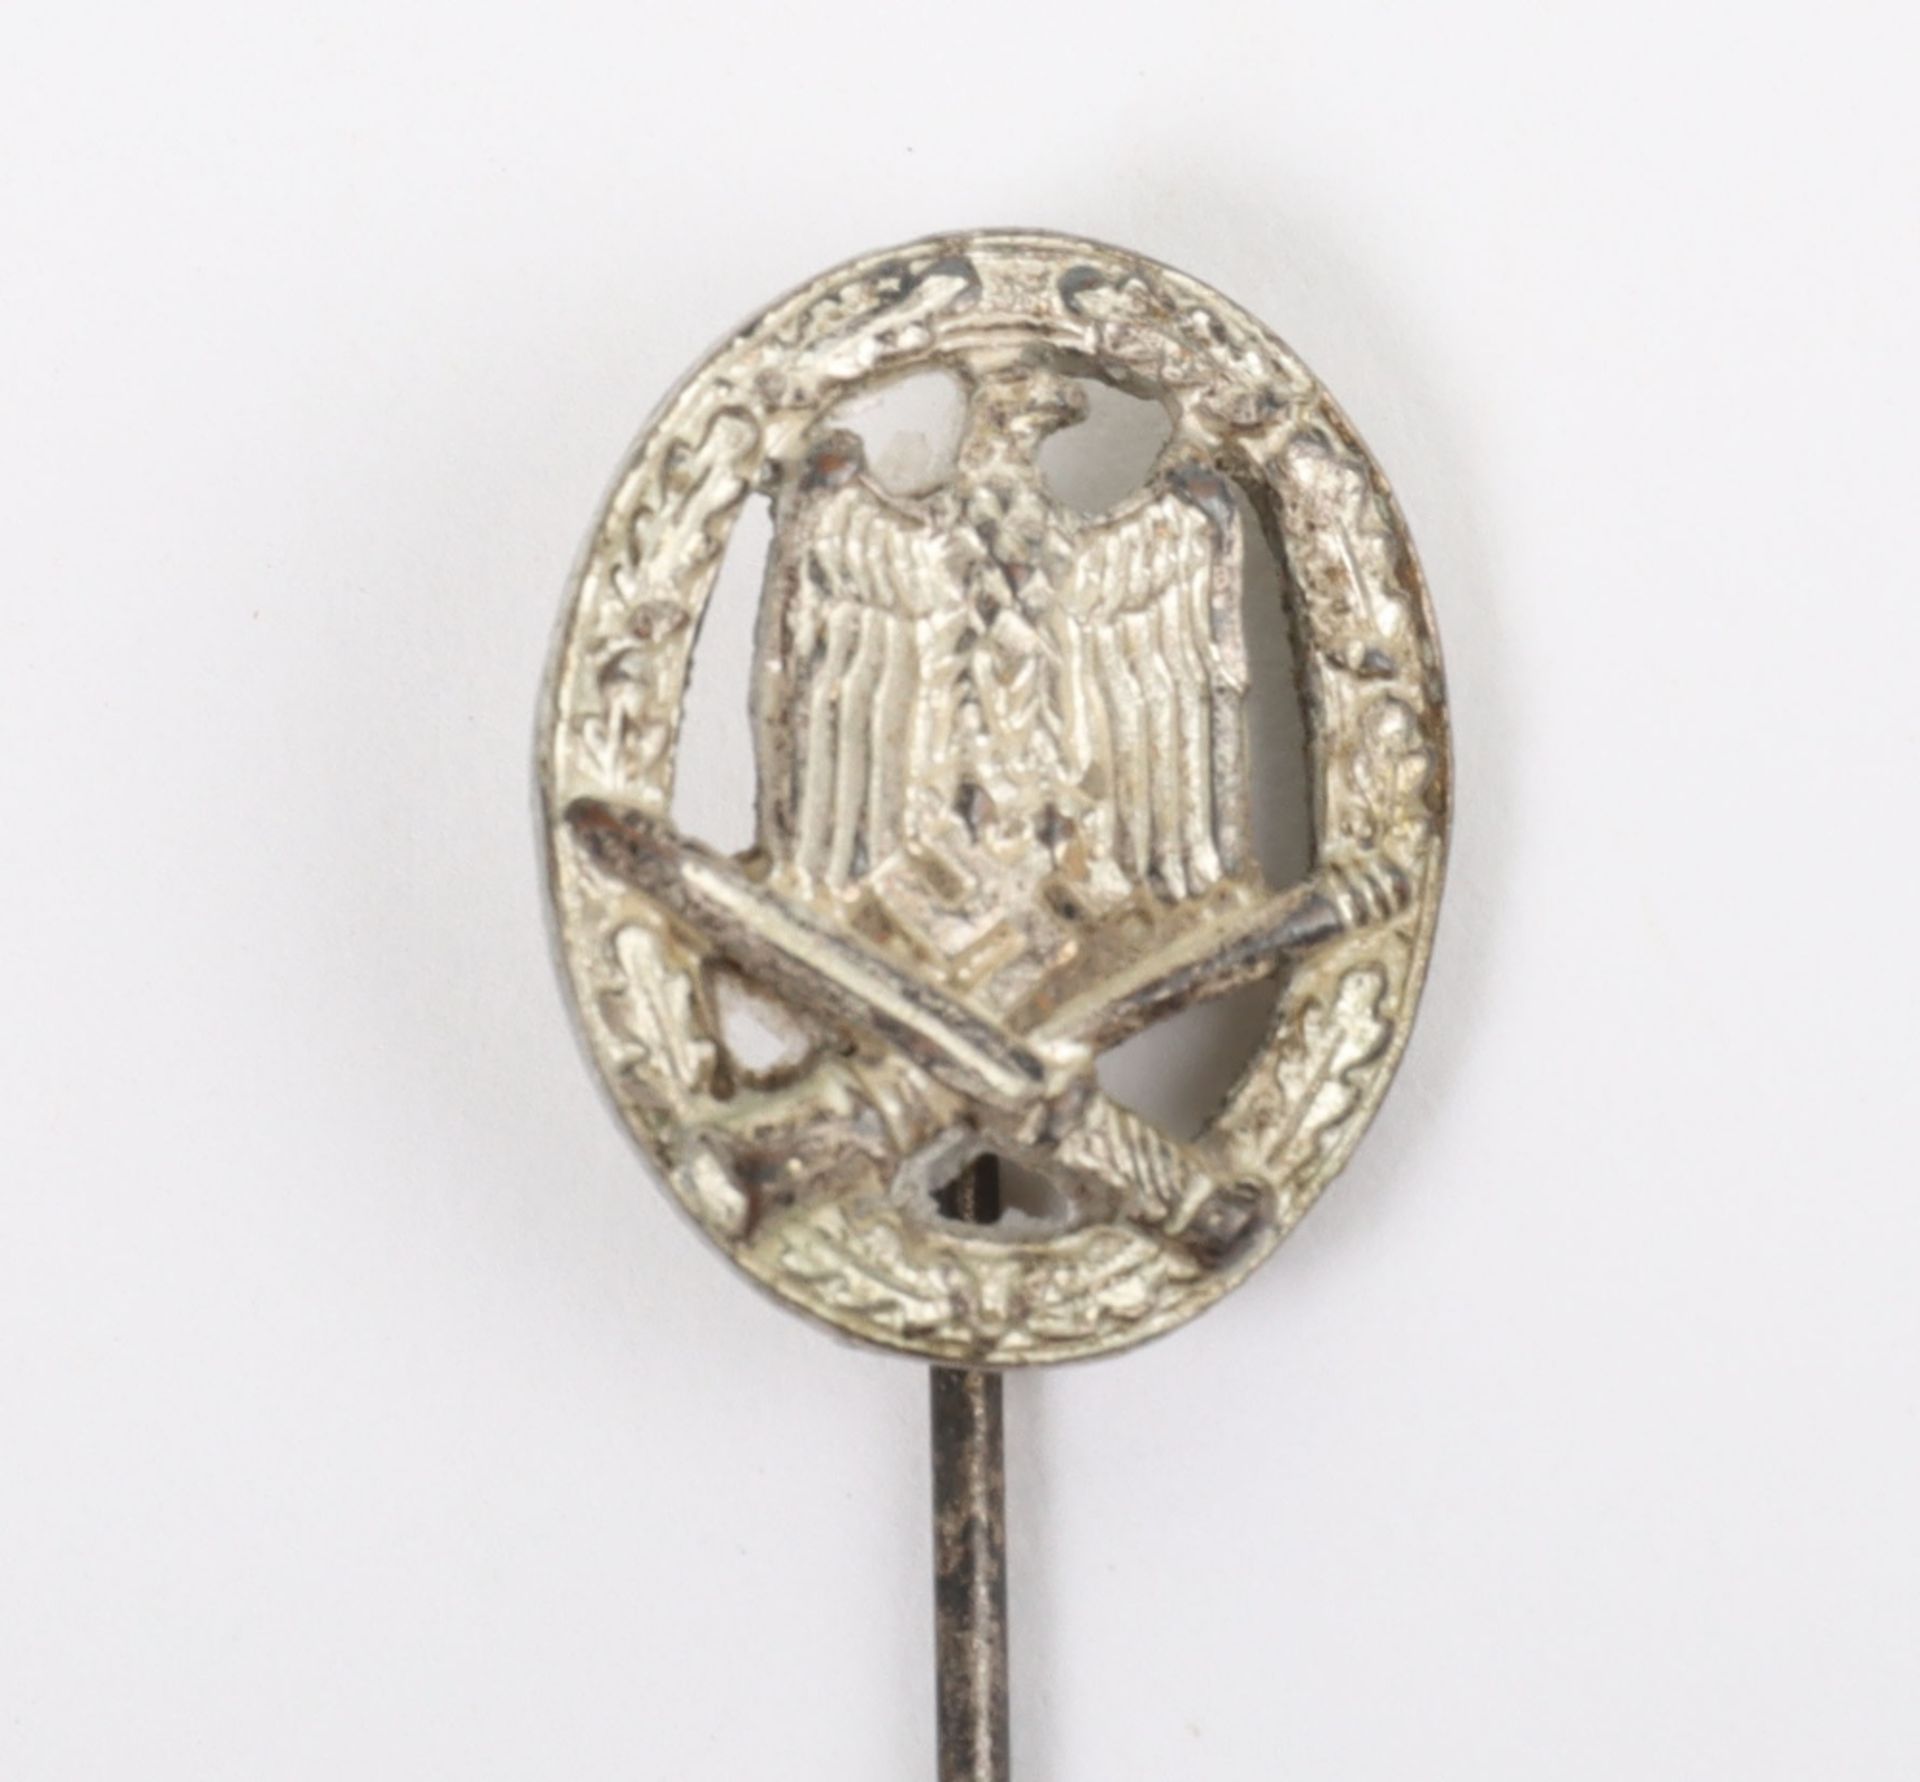 Miniature WW2 German Army / Waffen-SS General Assault Badge in Silver